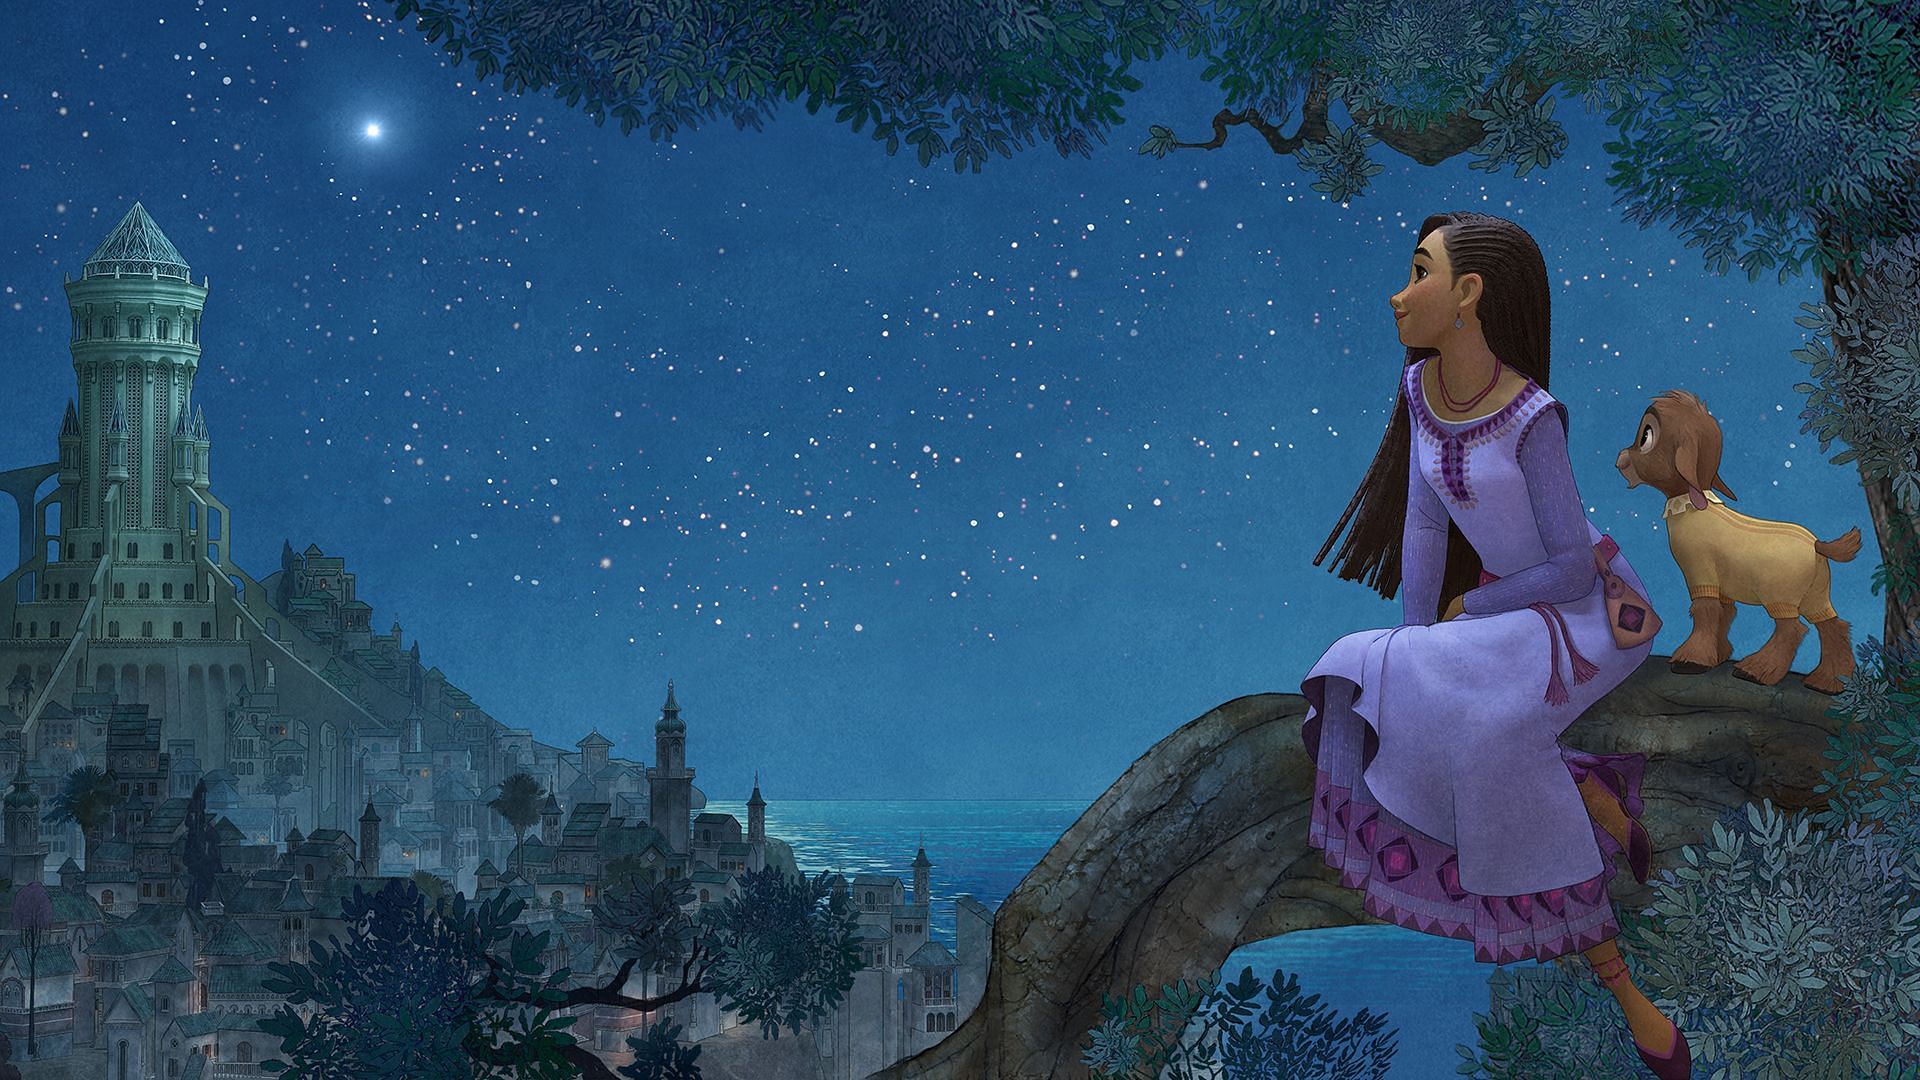 First look of Wish (Image via Walt Disney Studios)